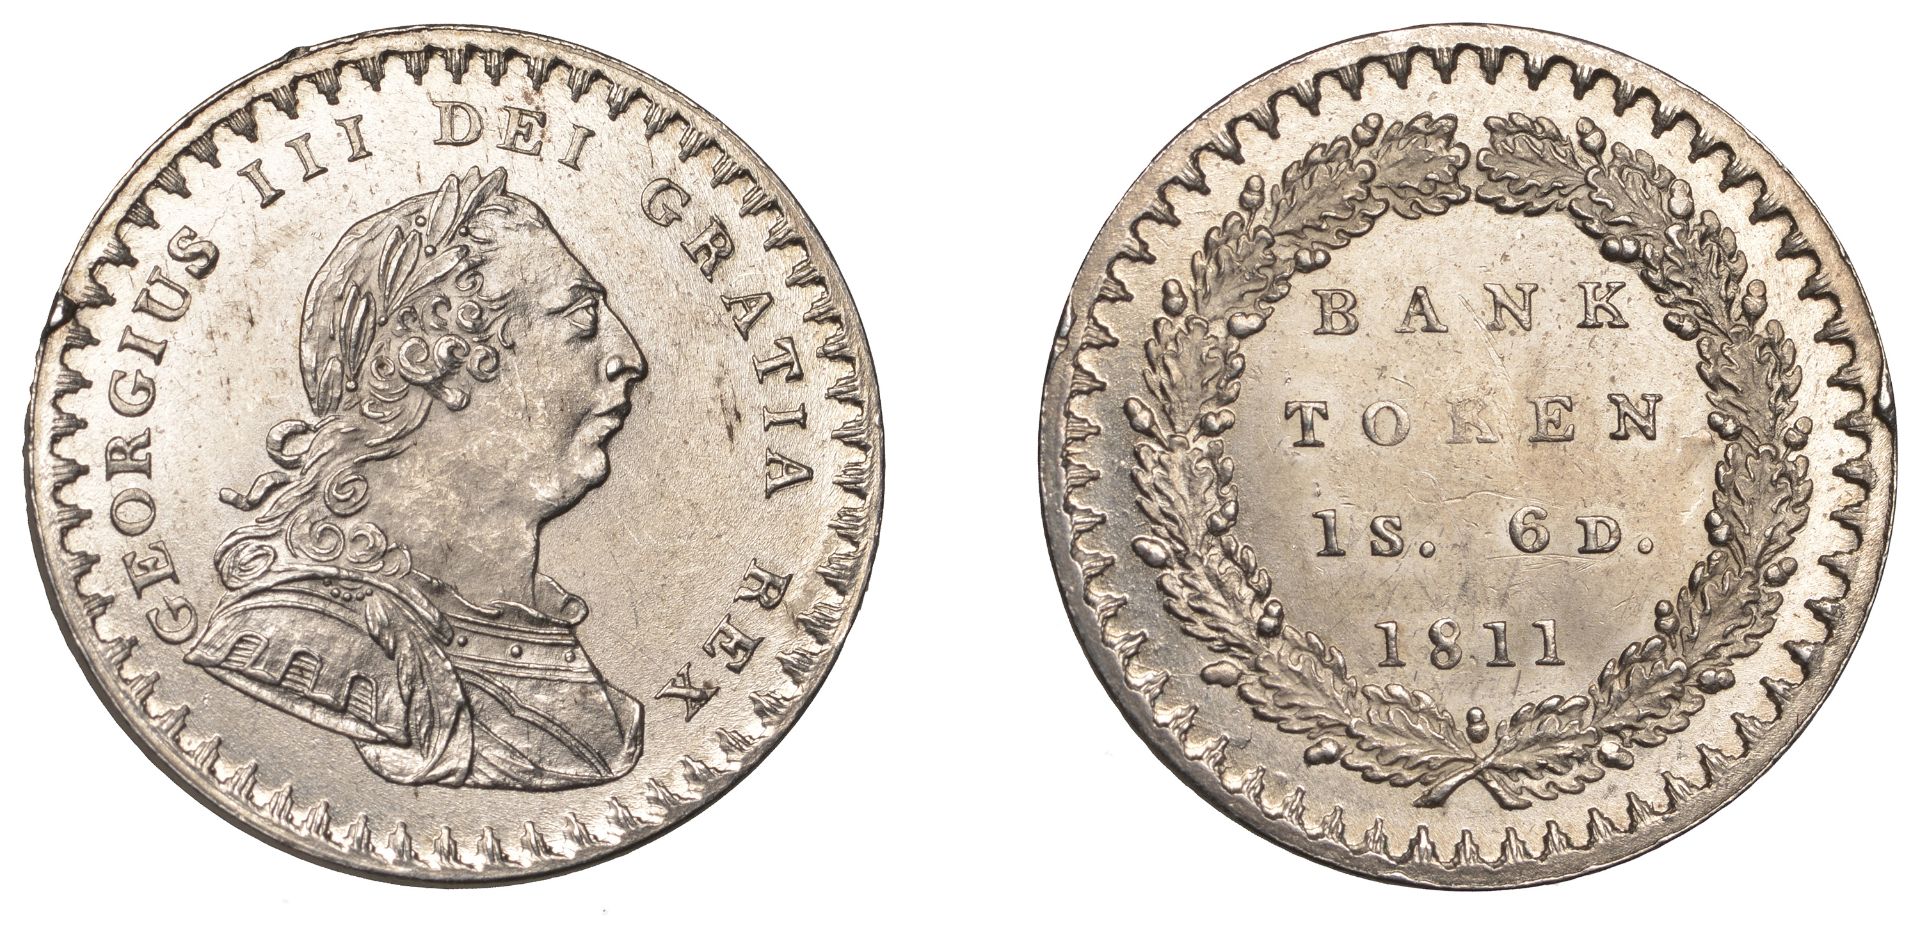 George III (1760-1820), Bank of England, Eighteen Pence, 1811 (ESC 2112; S 3771). A few mino...